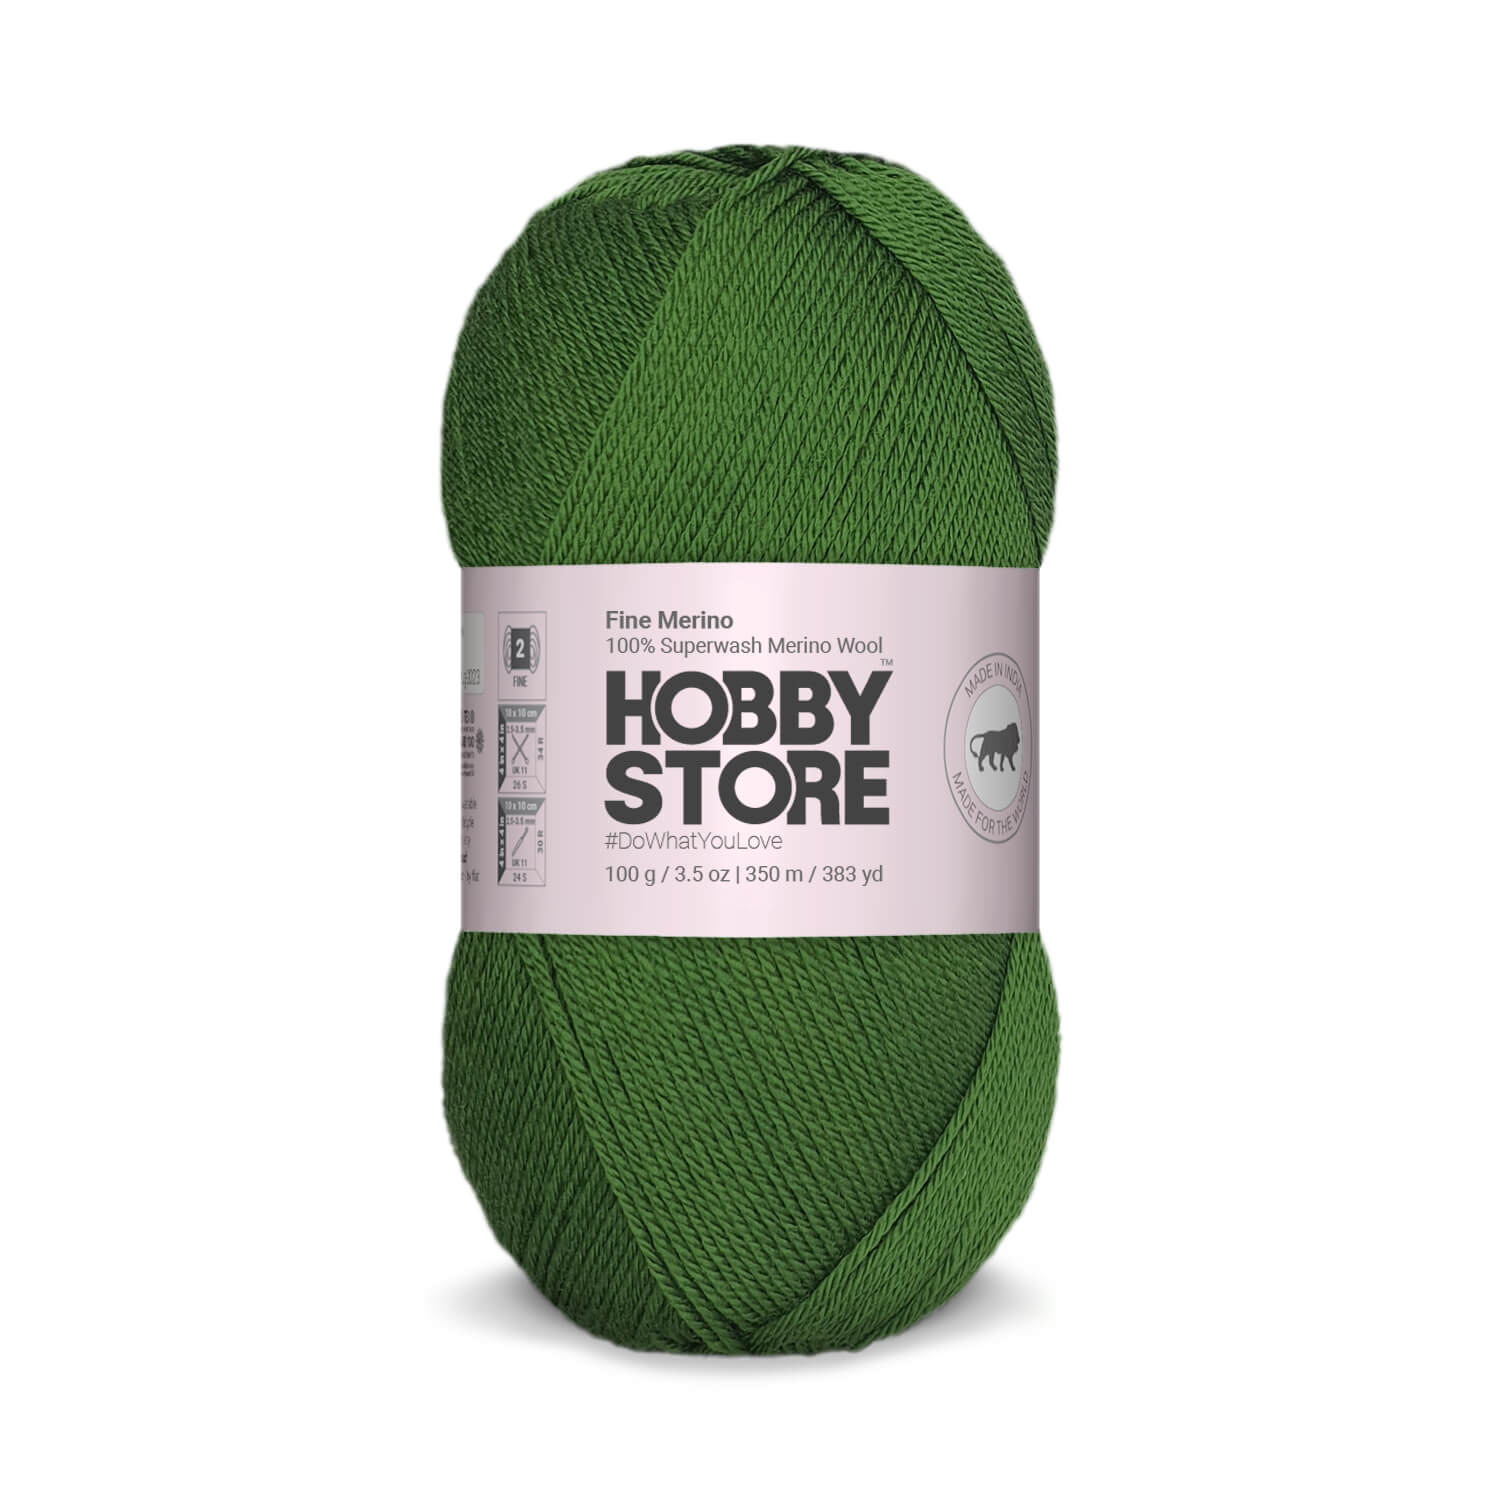 Fine Merino Wool by Hobby Store - Green FM018